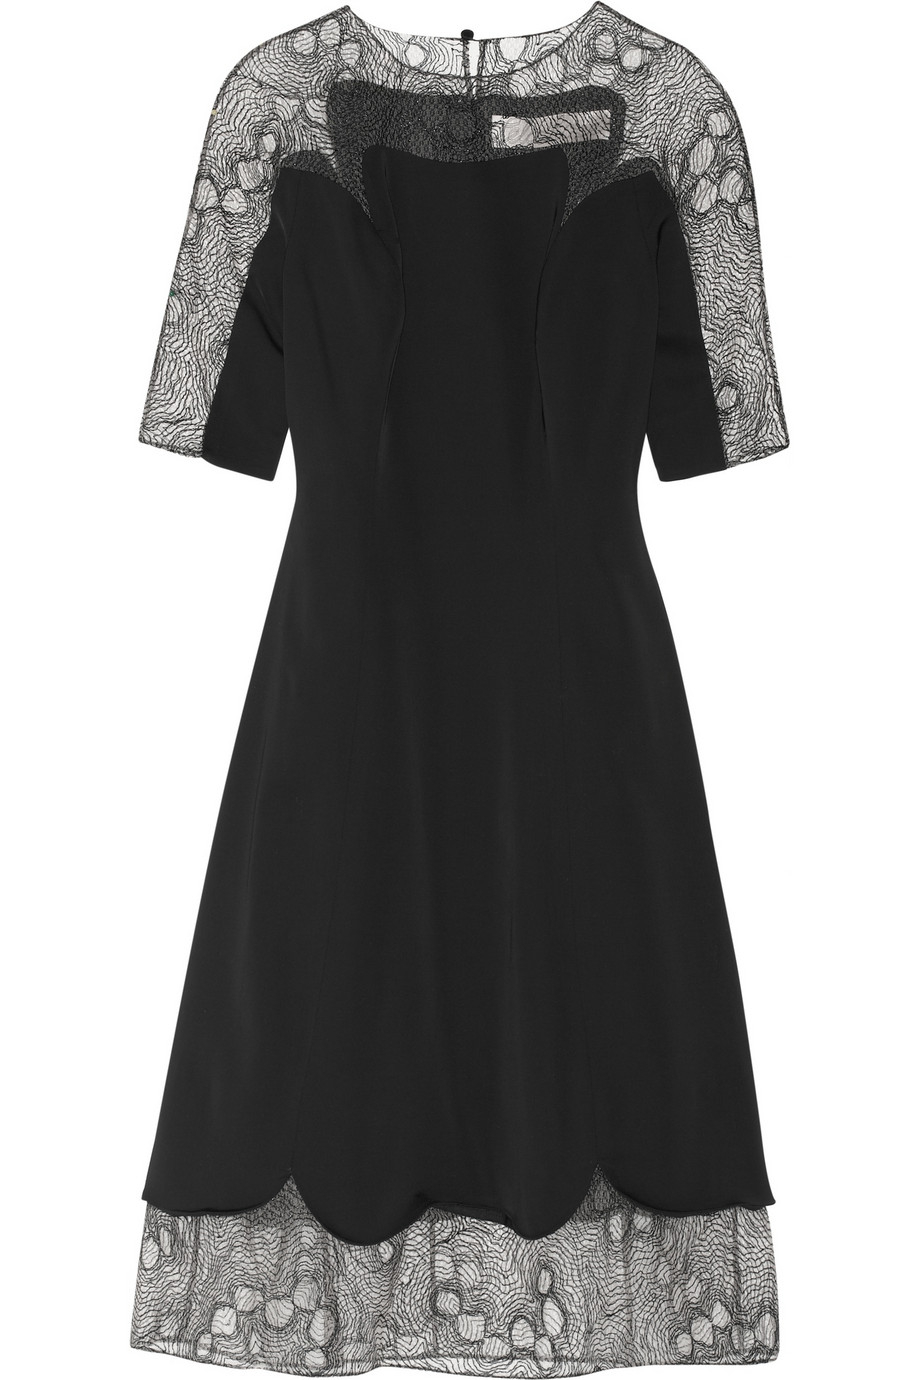 Lela rose Lace-Trimmed Stretch-Sateen Dress in Black | Lyst